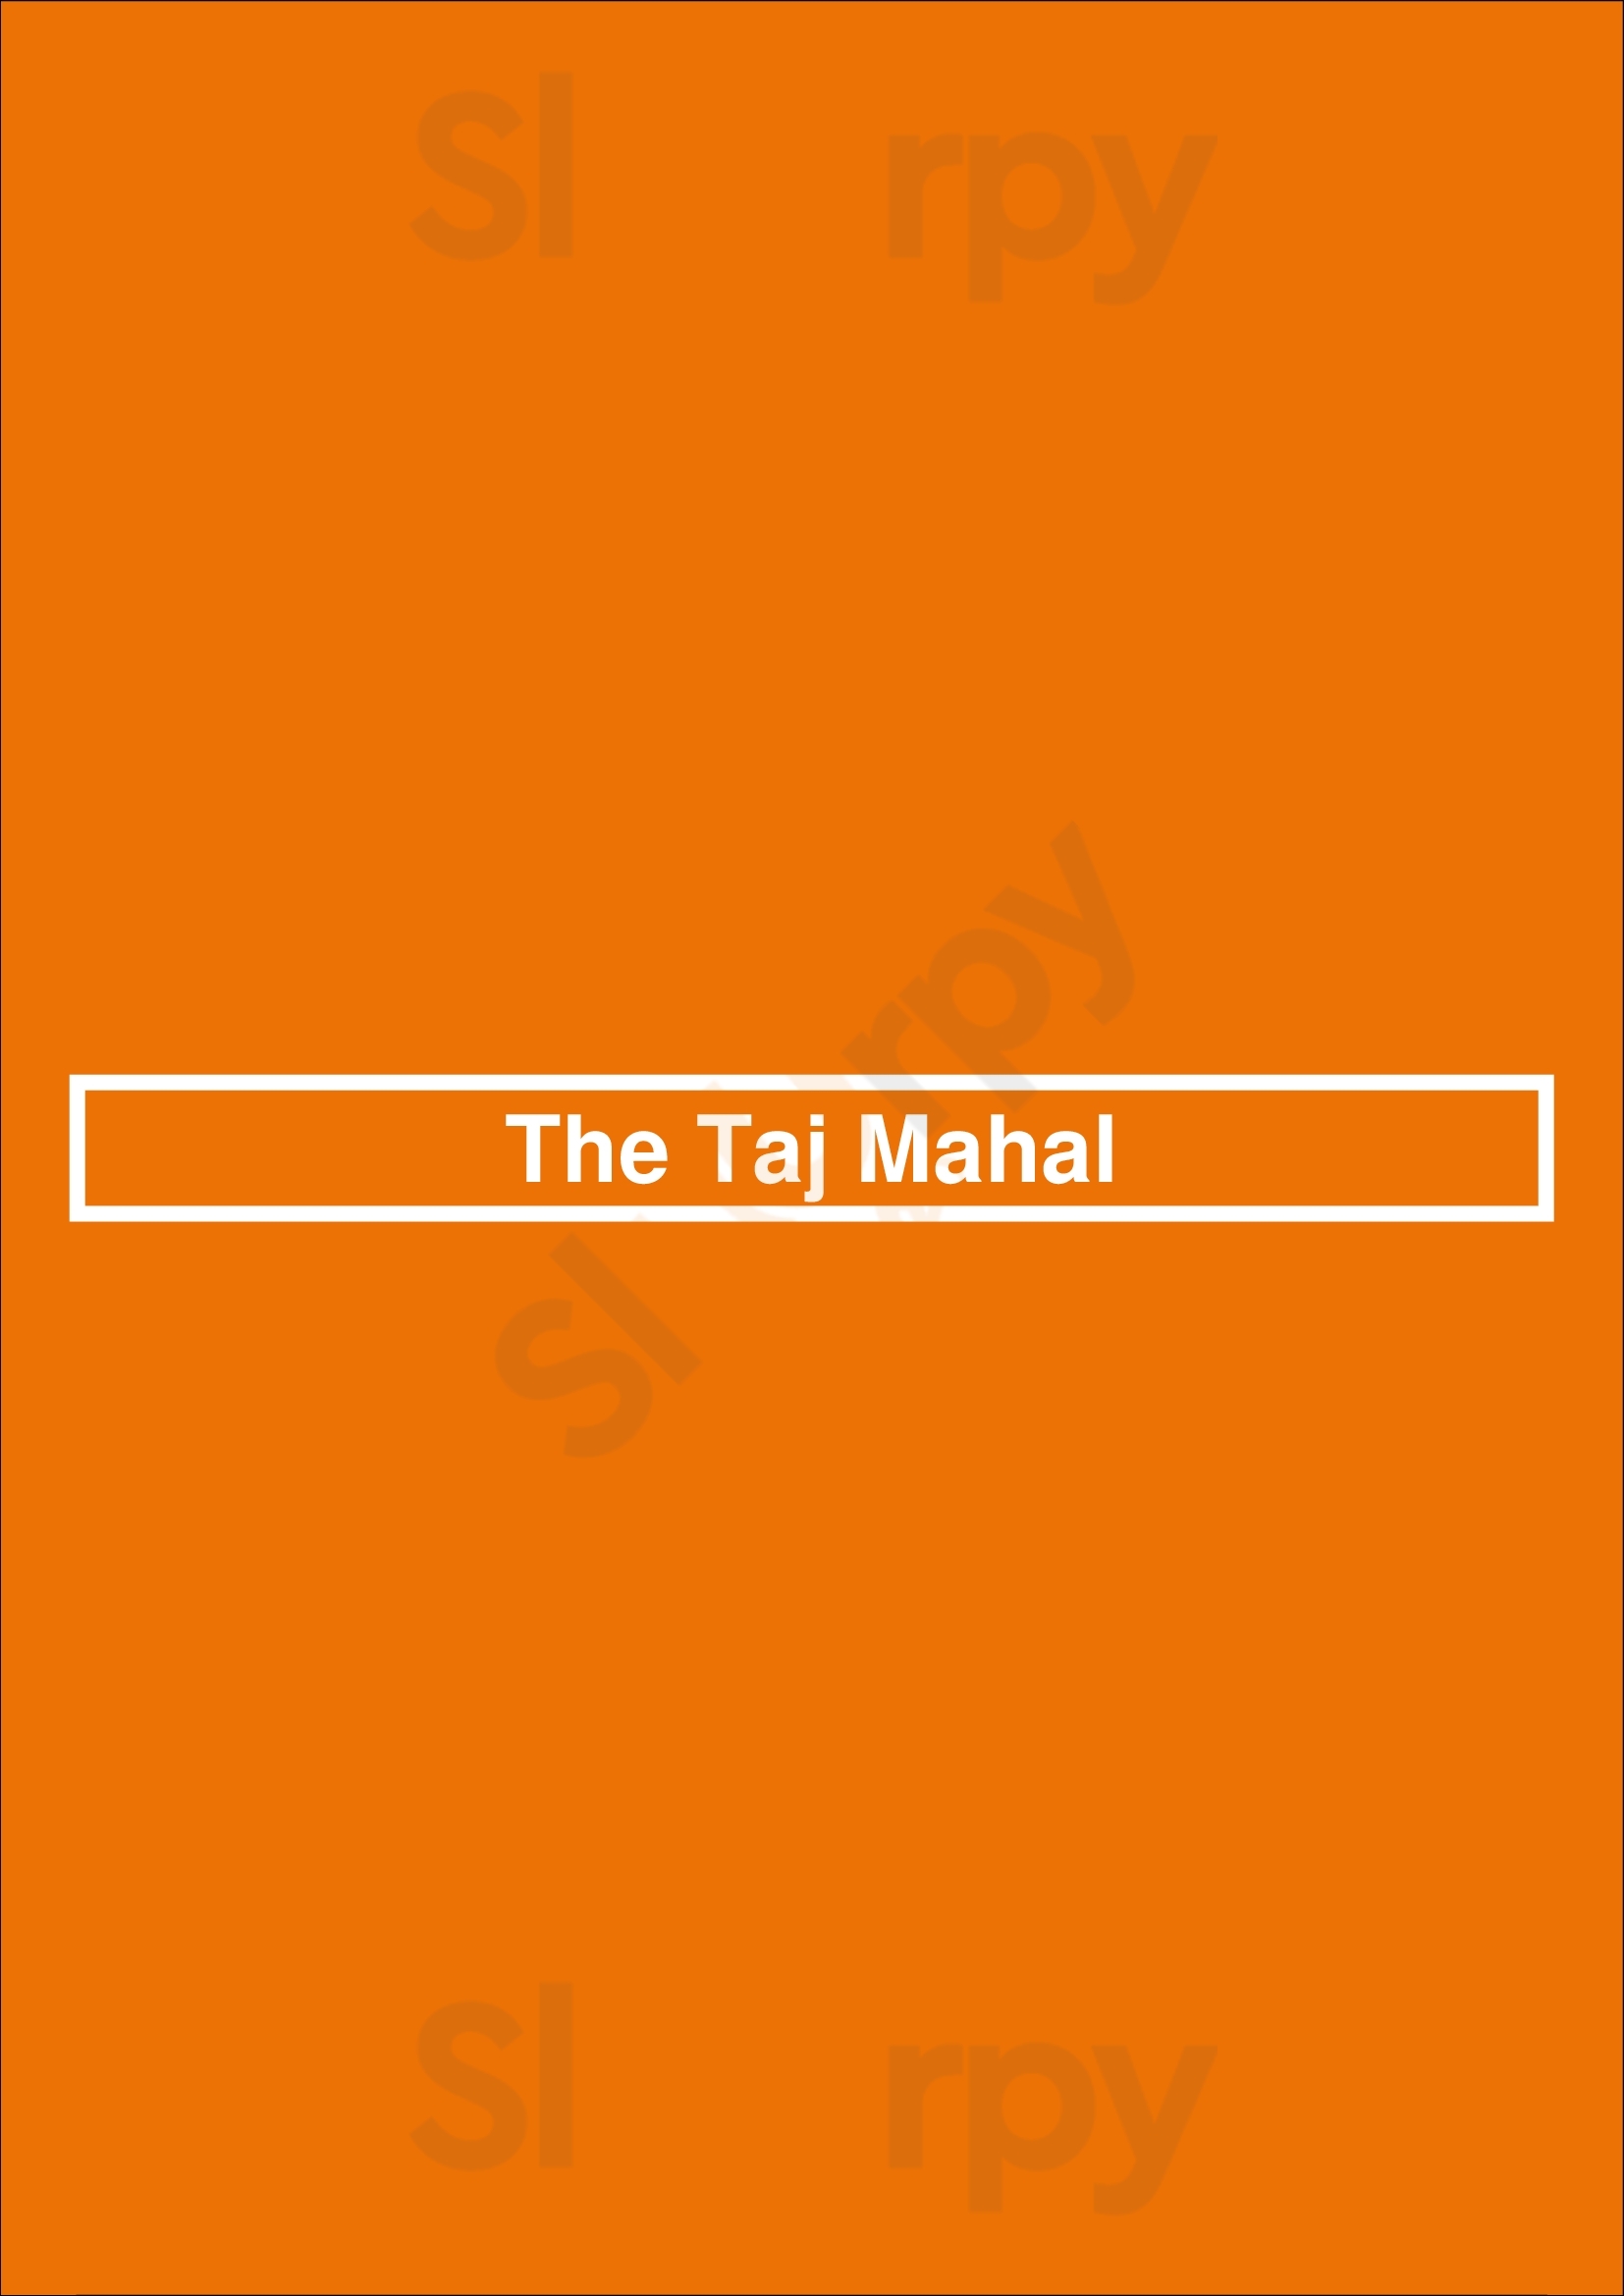 The Taj Mahal Bexhill-on-Sea Menu - 1